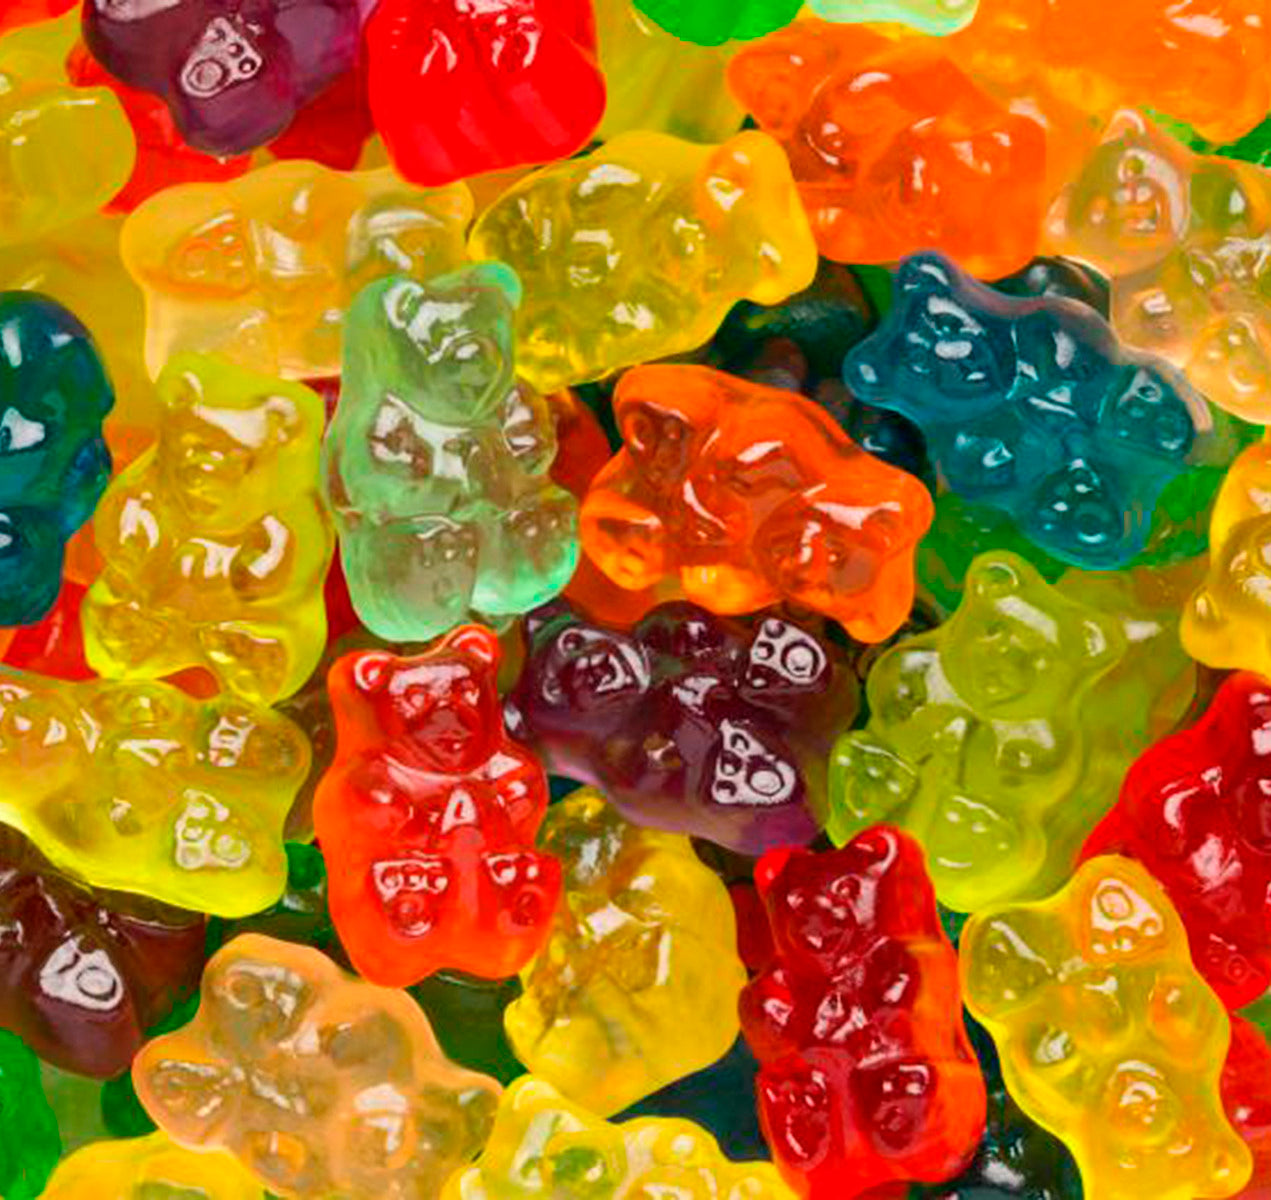 12 Flavor Gummi Bears (1 lb.)